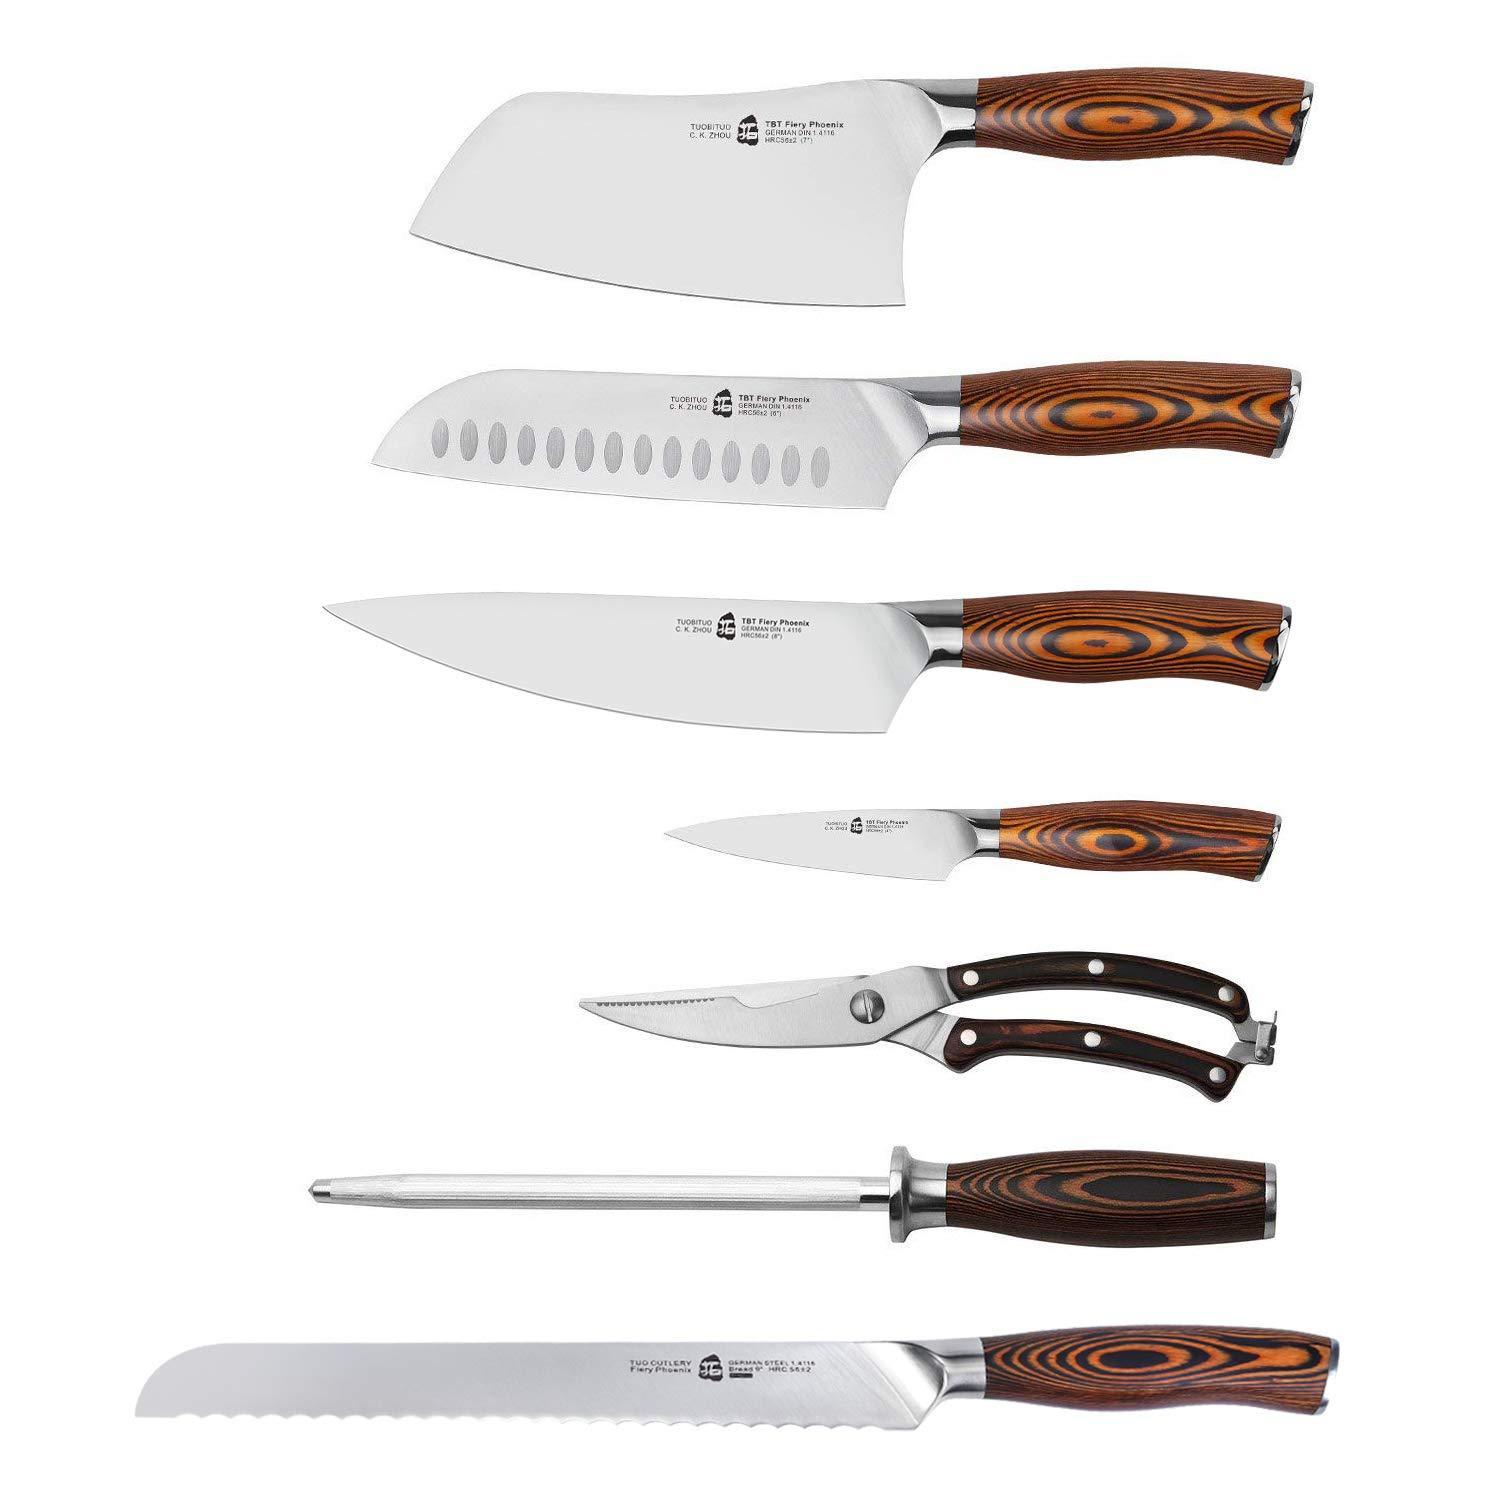 TUO Catlery - TC0714 - Japanese Kitchen - Chef Knife Set 8pcs